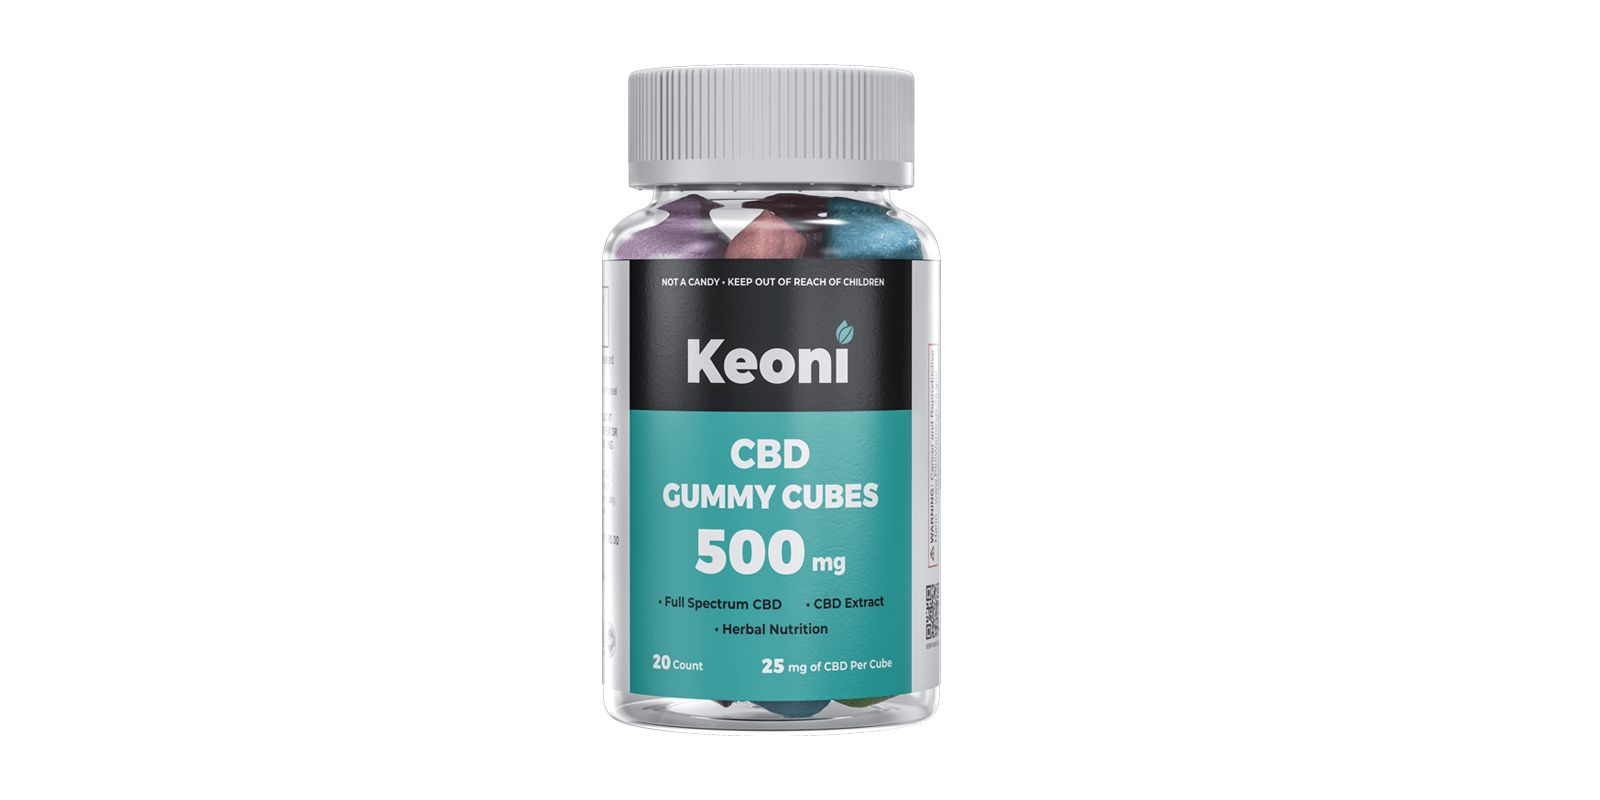 Keoni CBD Gummy Cubes reviews